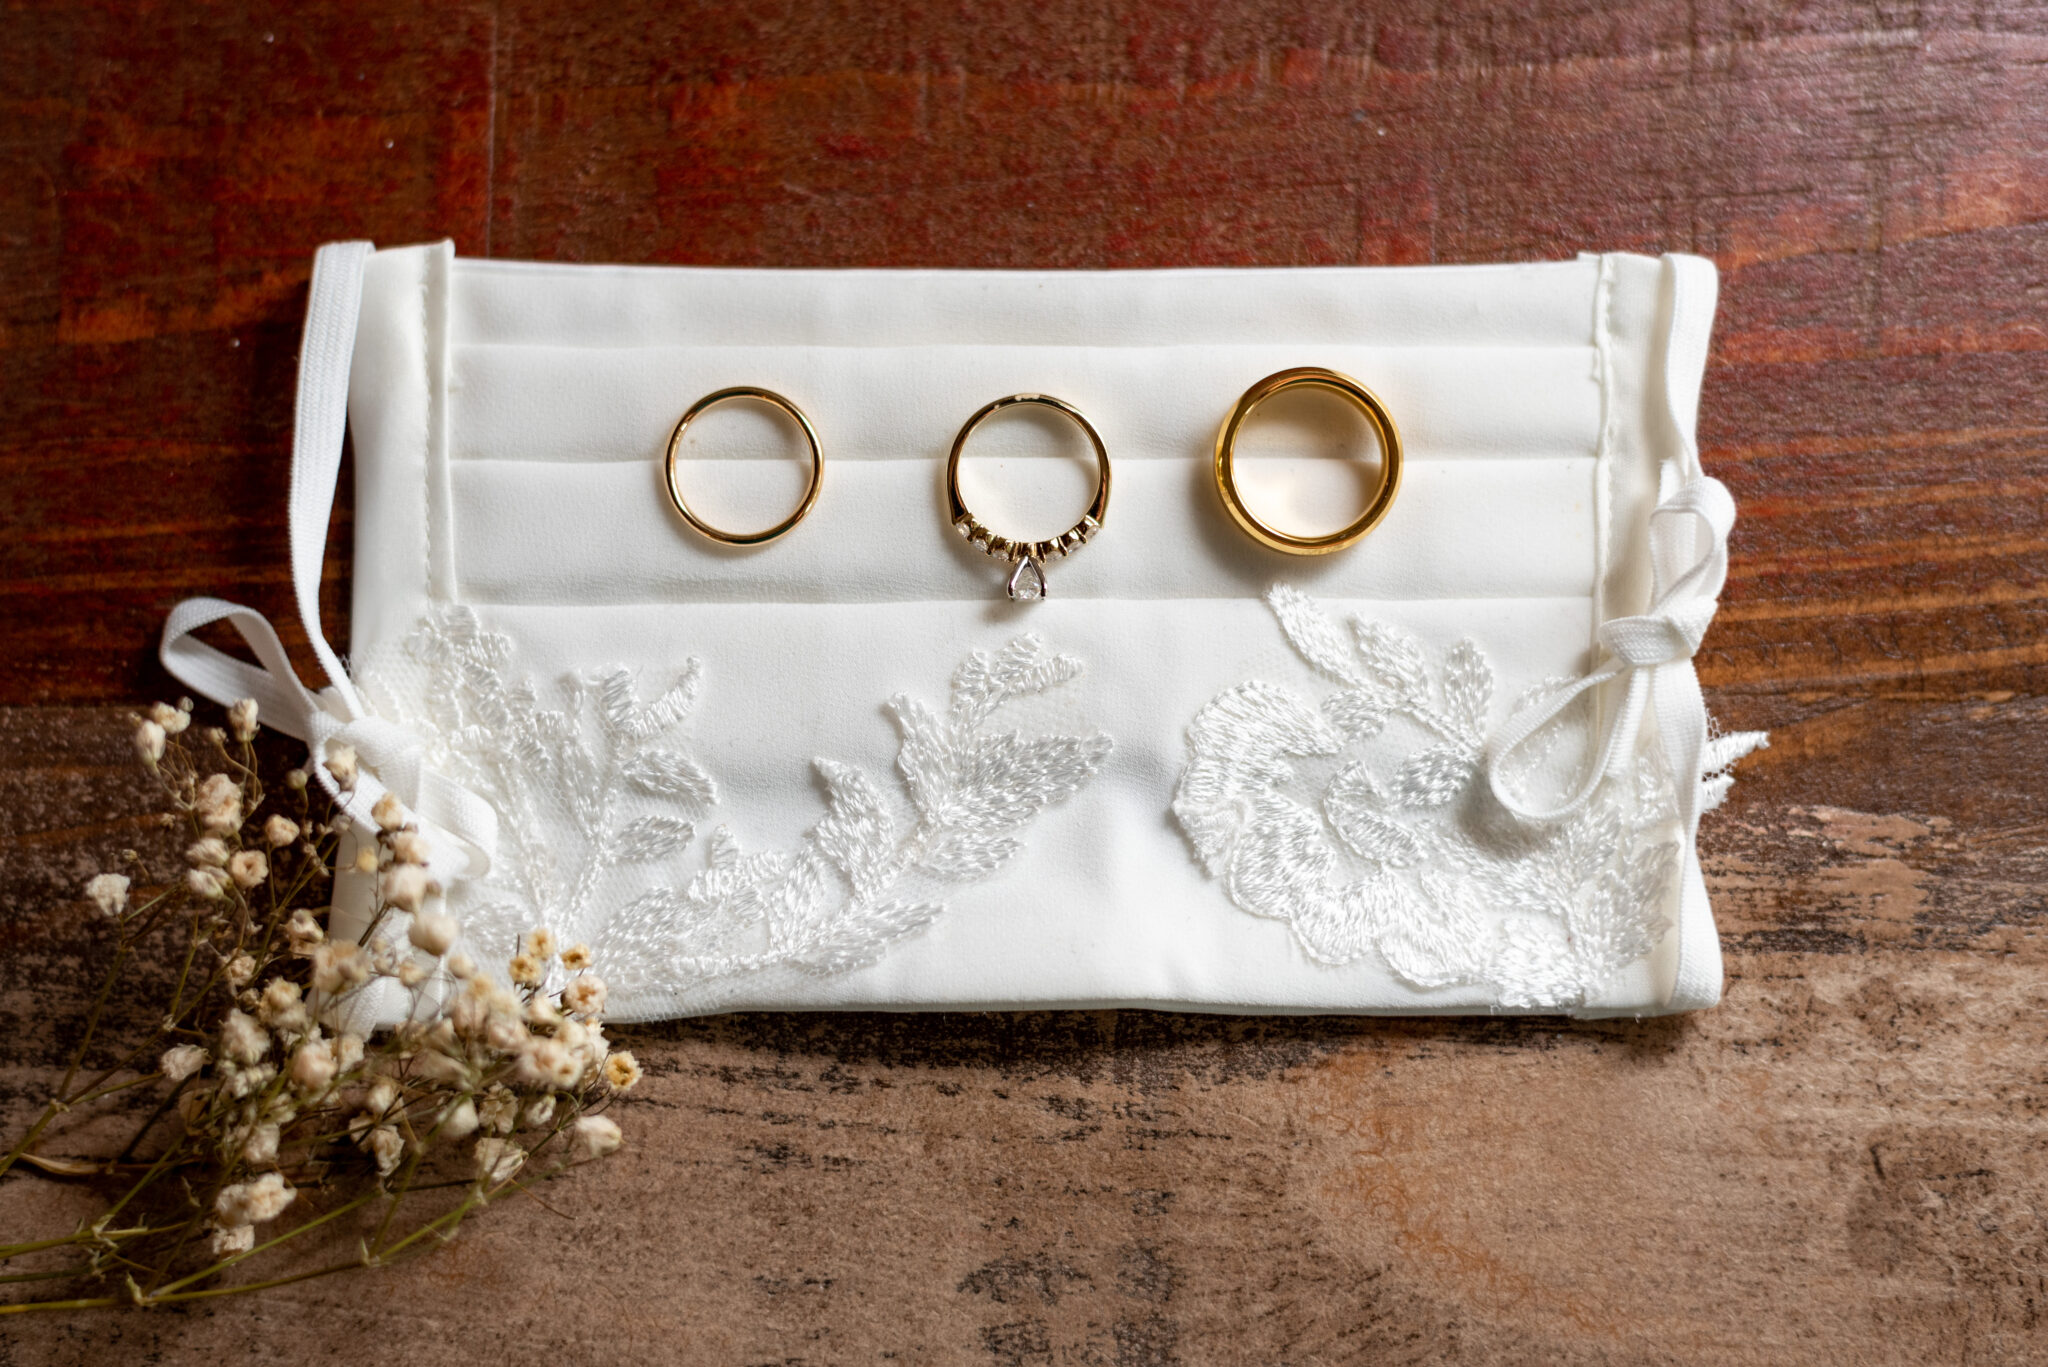 three gold wedding bands sit atop a white bridal mask